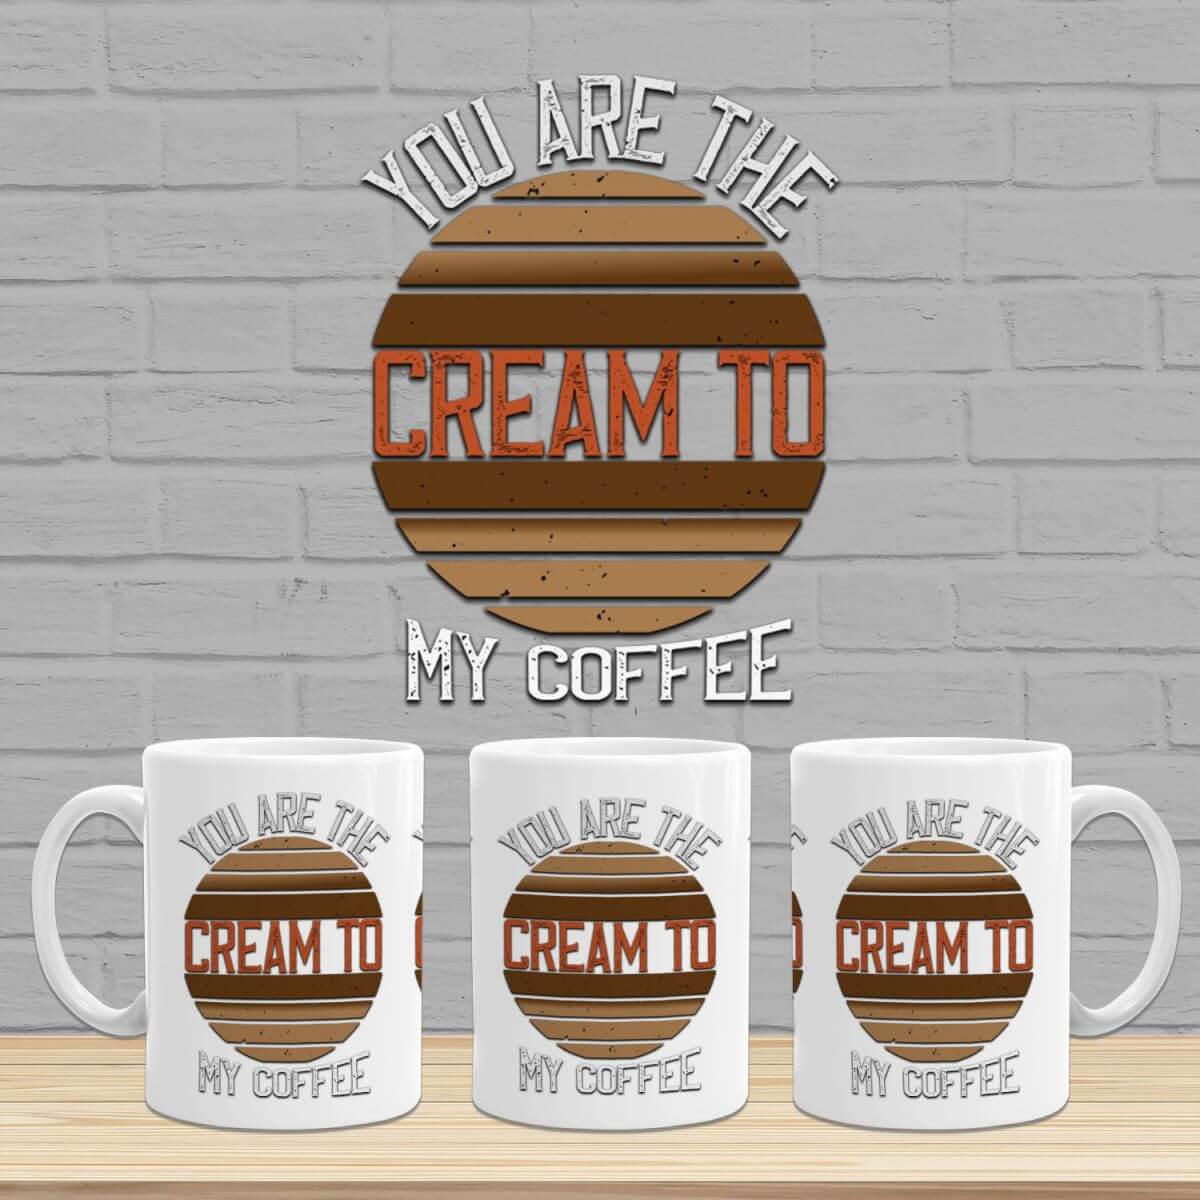 11oz-White-Ceramic-Mug-Cream-to-my-coffee-3side-view-grey-brick-bgnd